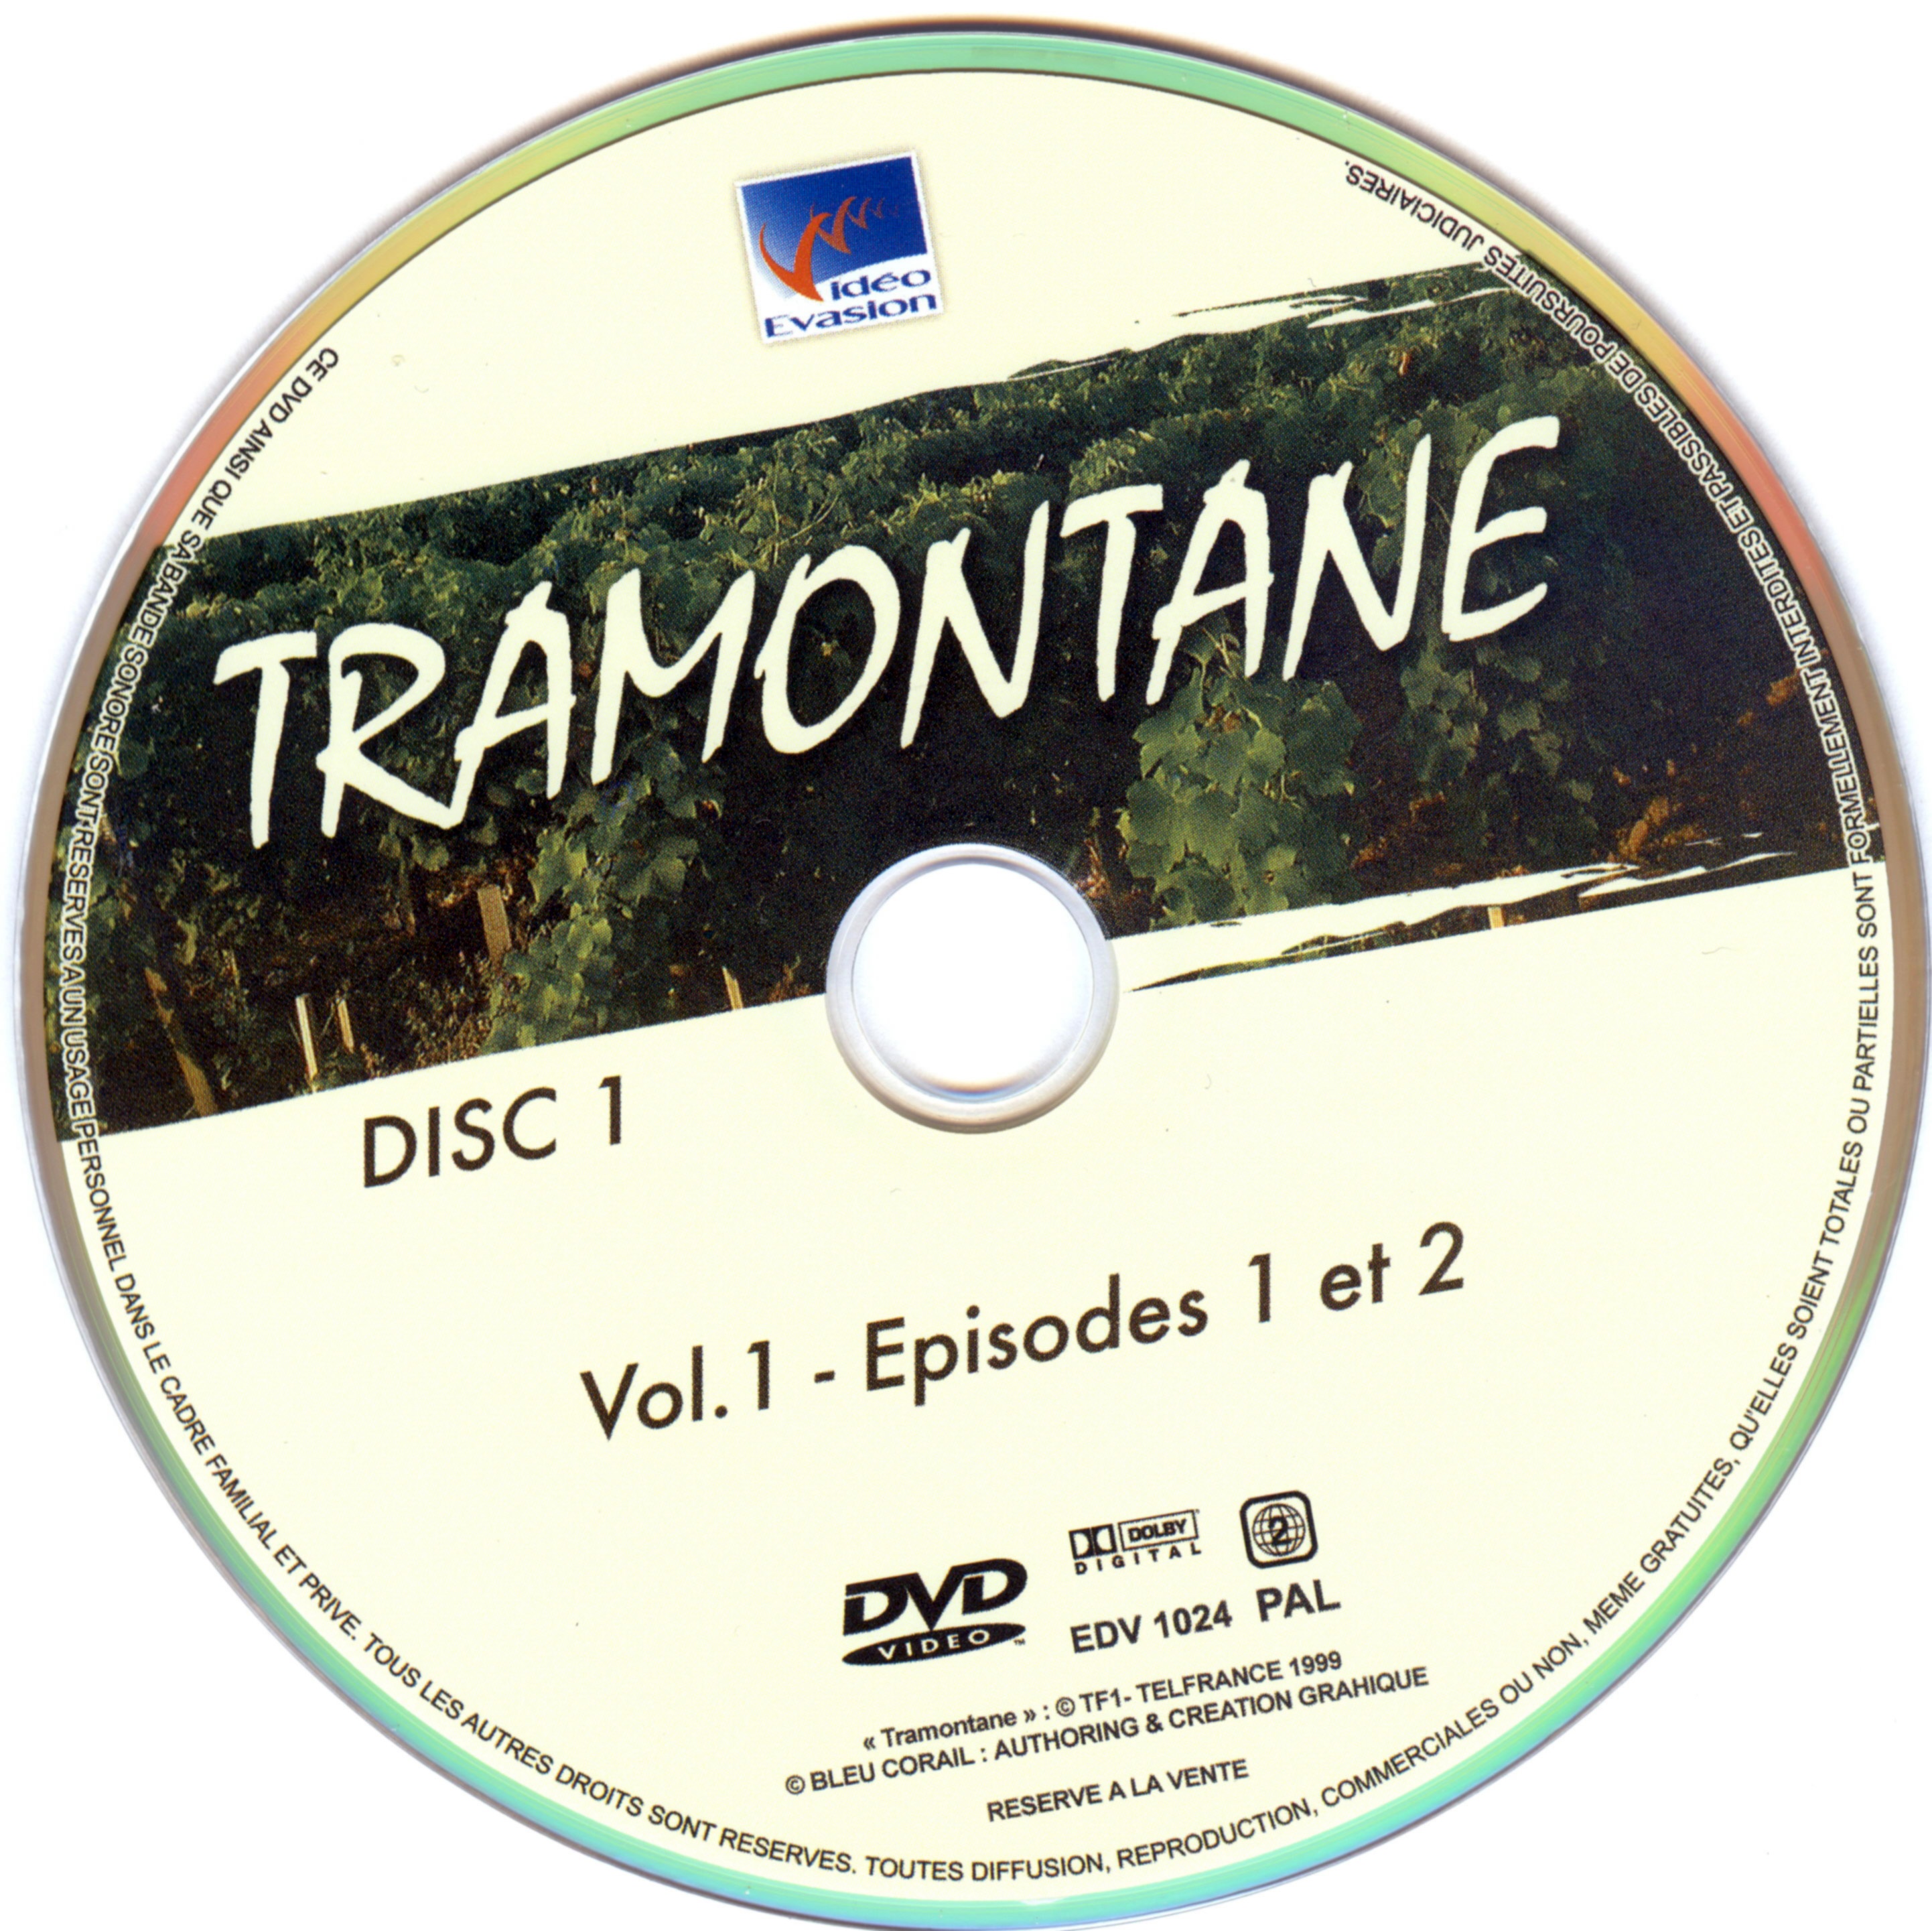 Tramontane DISC 1